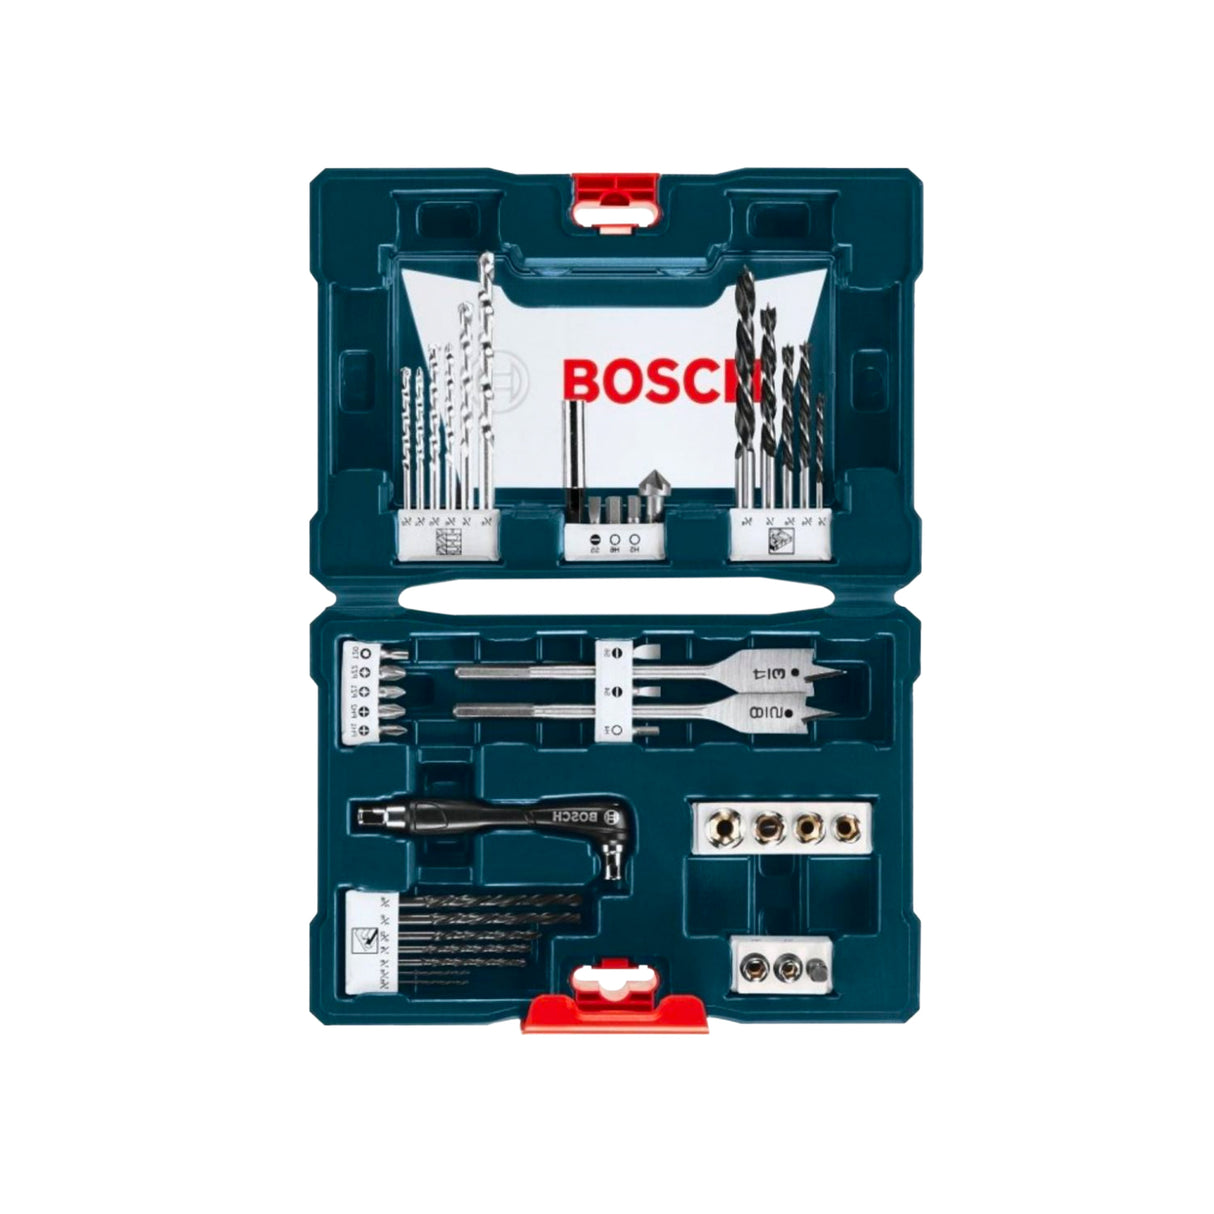 Combo Rotomartillo Bosch GSB180 - LI 1/2"" + Set de Brocas y Cinceles 41 Pzs